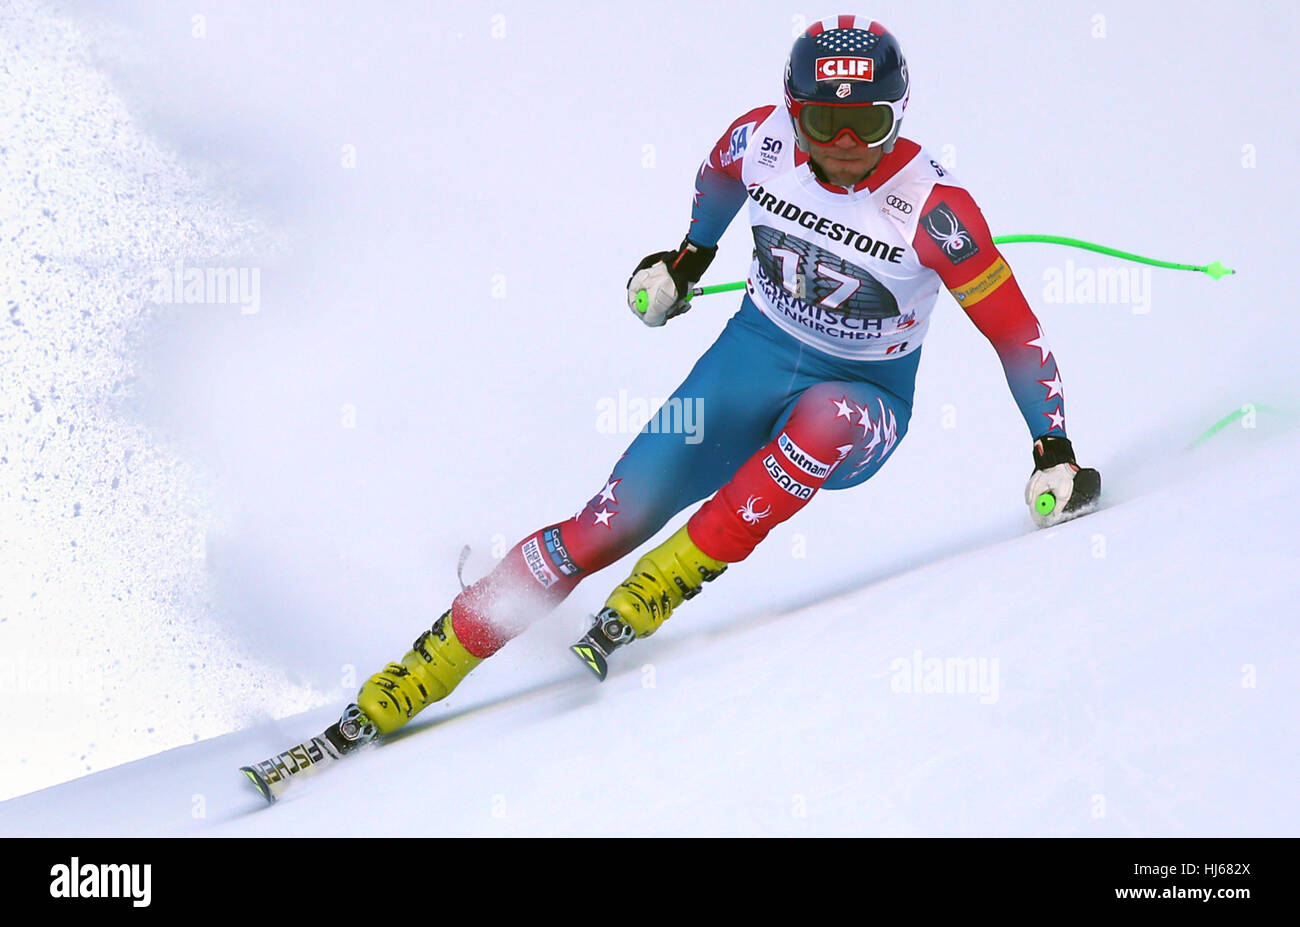 Garmisch-Partenkirchen, Germany. 26th Jan, 2017. American skier Steven Nyman in action during a training run at the Skiing World Cup in Garmisch-Partenkirchen, Germany, 26 January 2017. Photo: Karl-Josef Hildenbrand/dpa/Alamy Live News Stock Photo